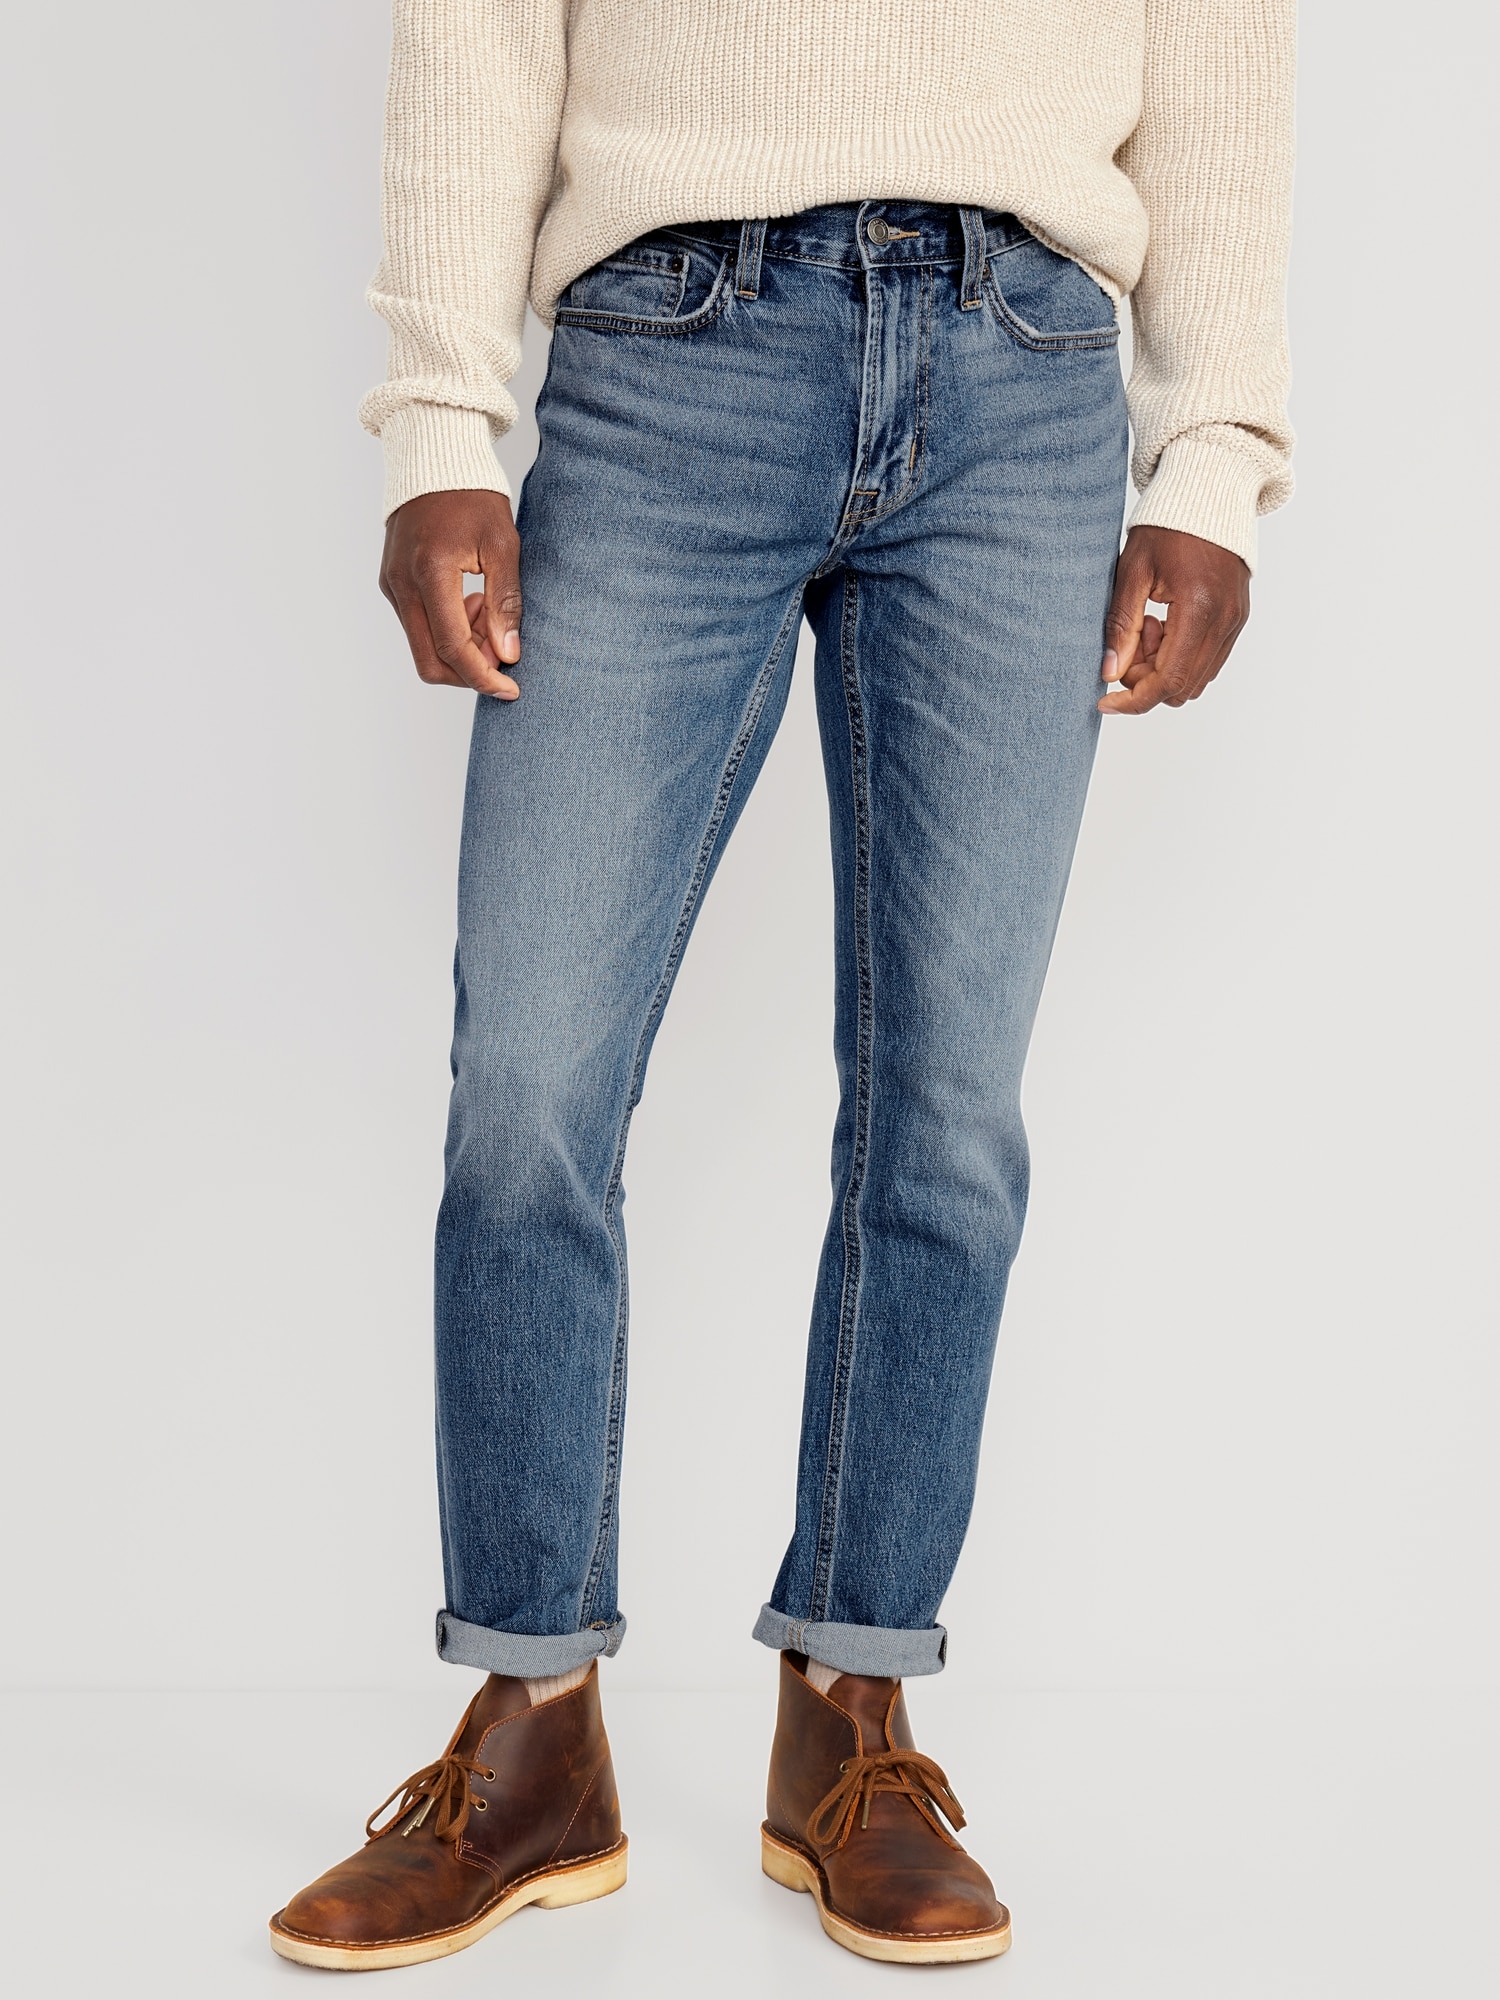 Men's Slim Fit Taper Jeans